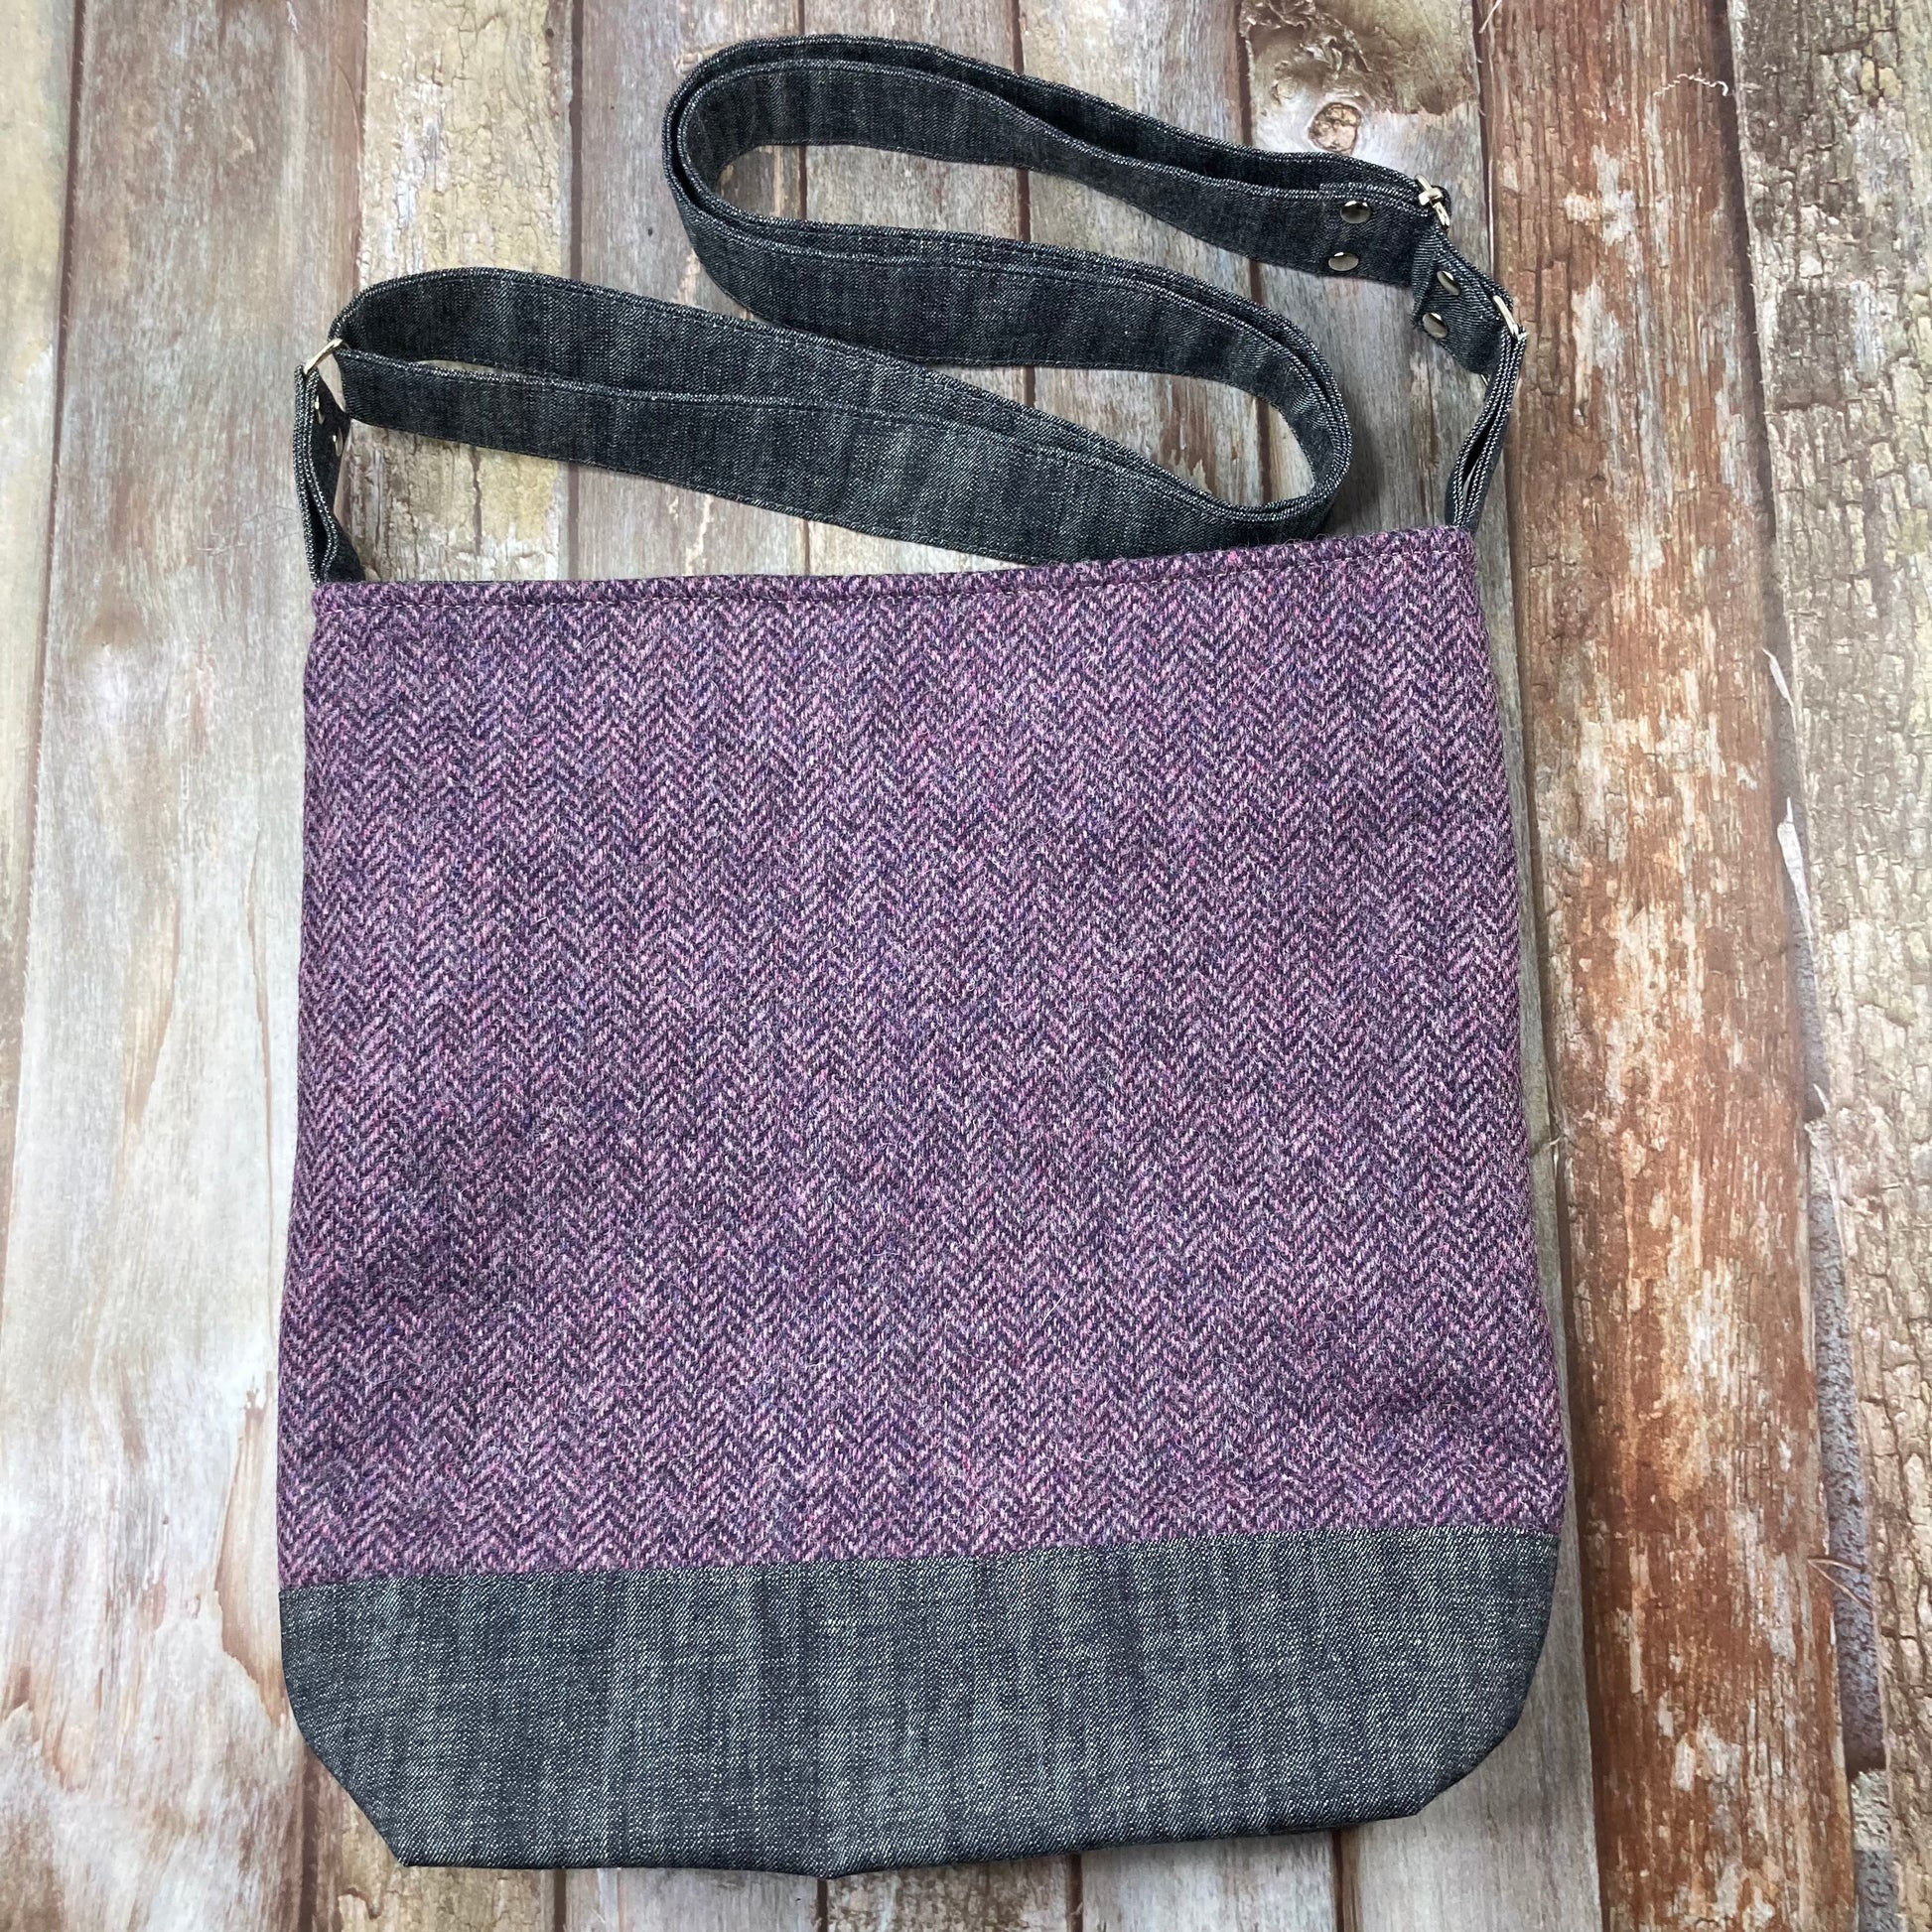 Shetland Tweed Crossbody Bag, Large Tote Shopping Bag - Uphouse Crafts